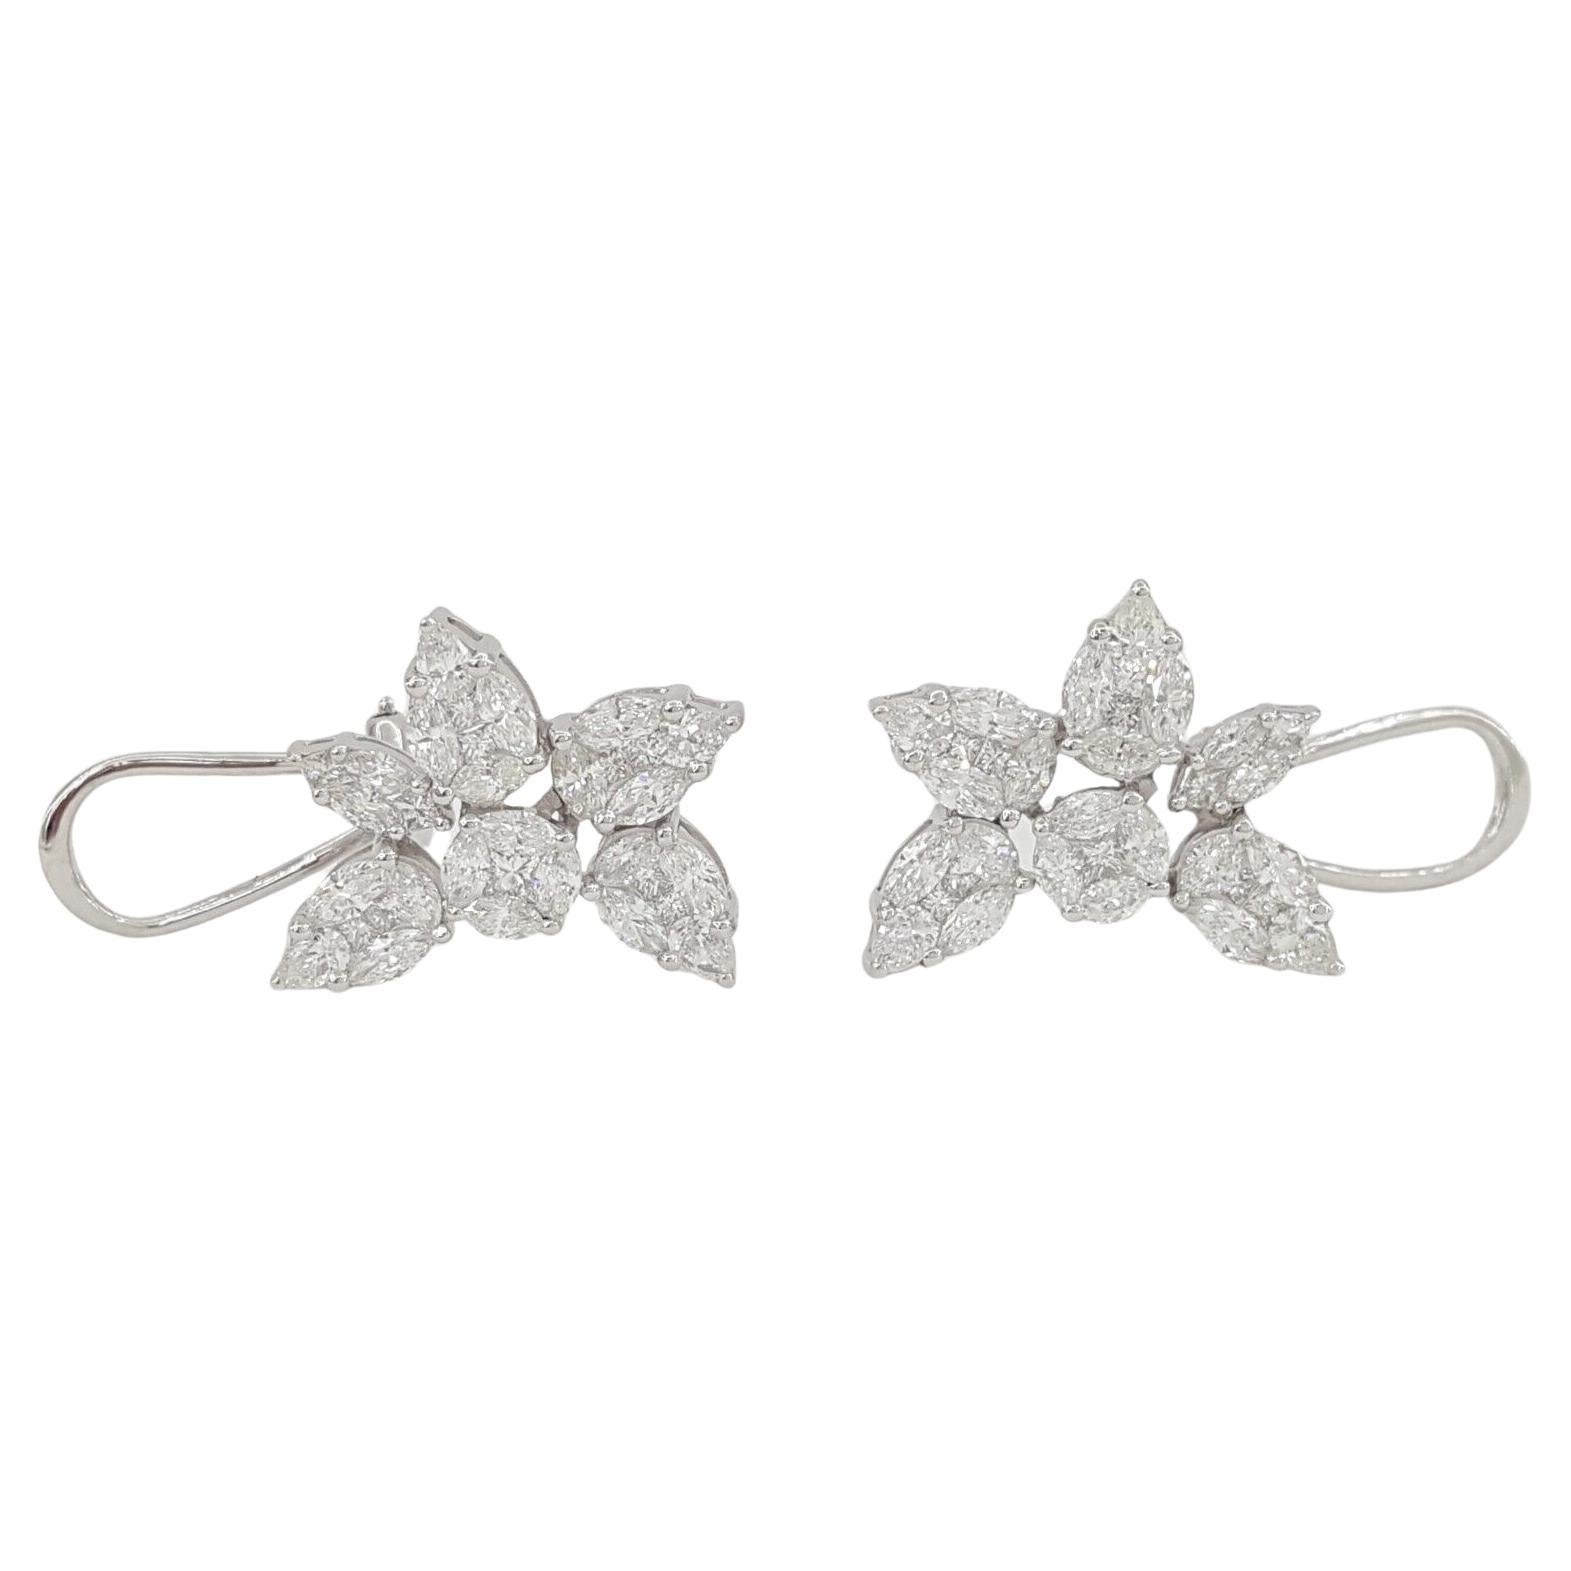  4 ct Pear, Marquise & Princess Cut Diamond Flower Shape Cluster 18k White Gold Cuff Earrings